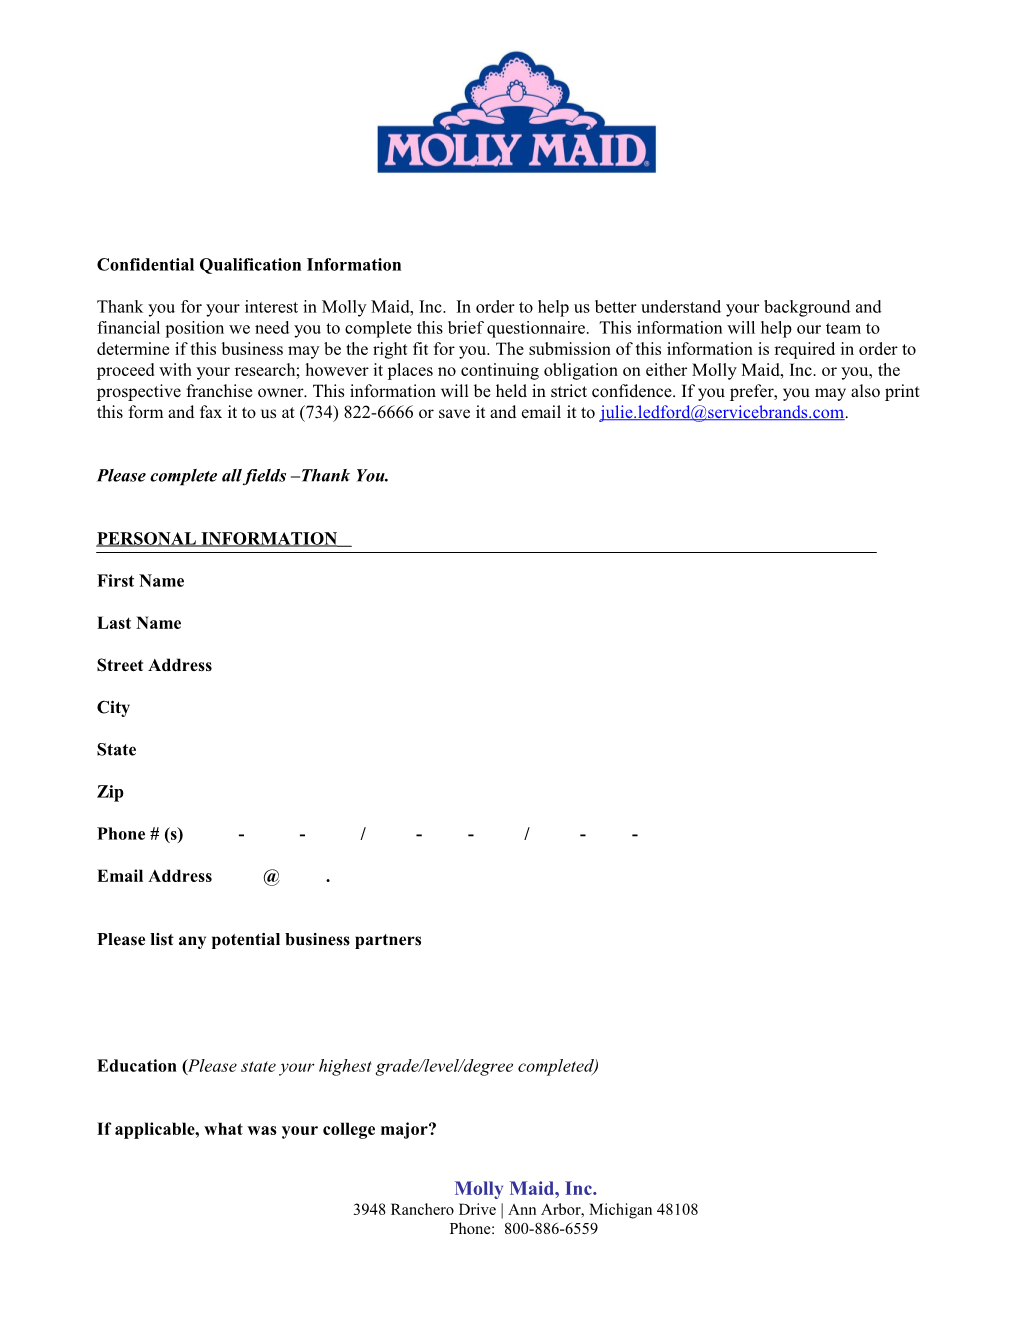 Confidential Qualification Information Form